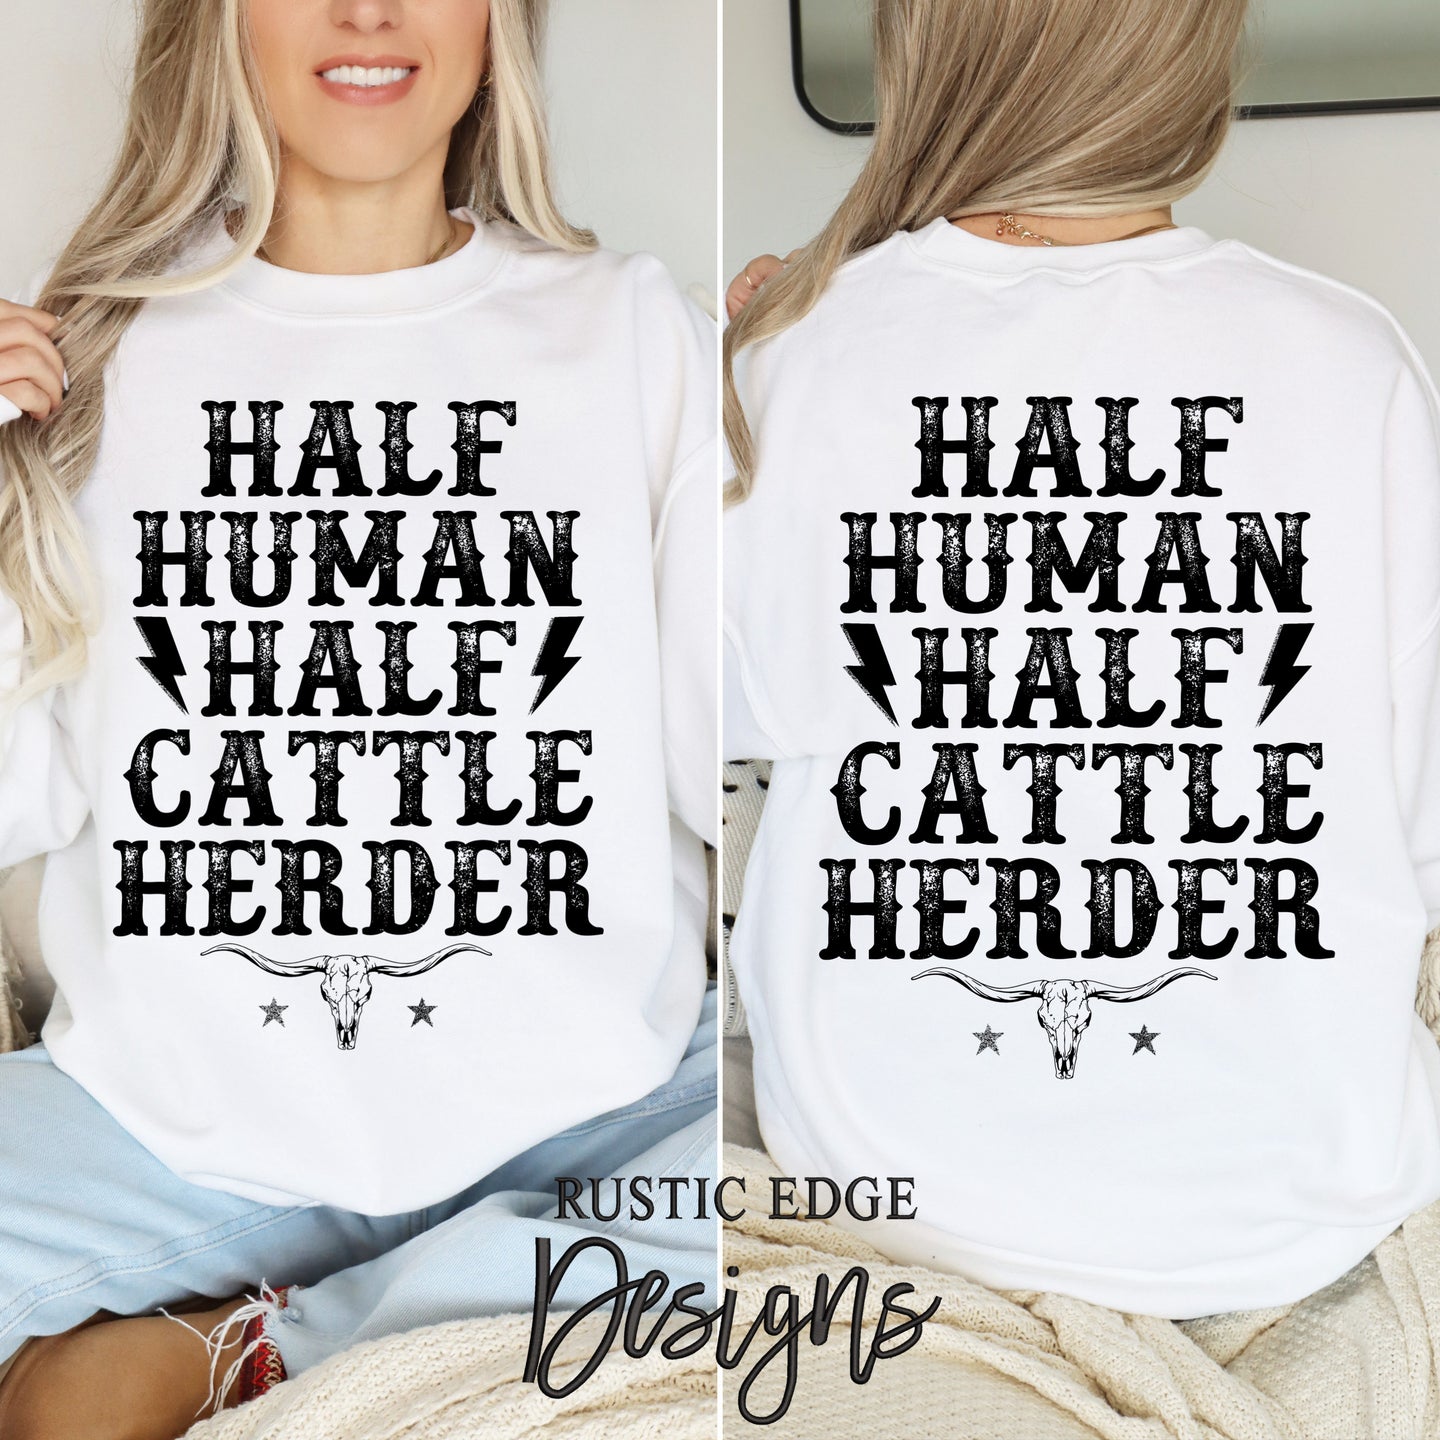 Half Human Half Cattle Herder